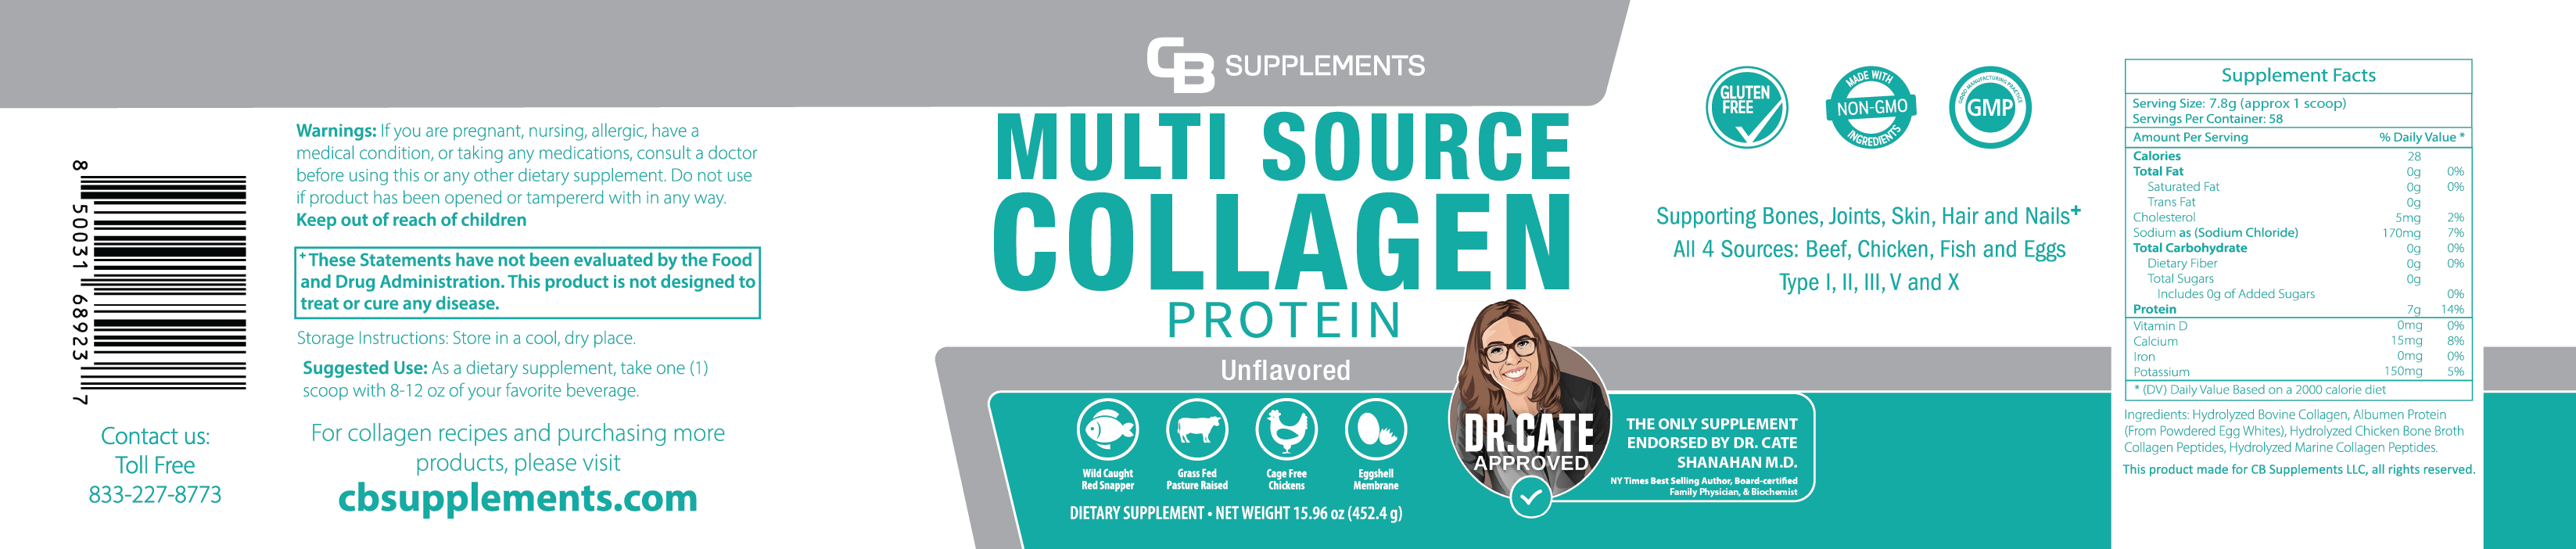 Every Day Unflavored Multi Collagen Protein Powder